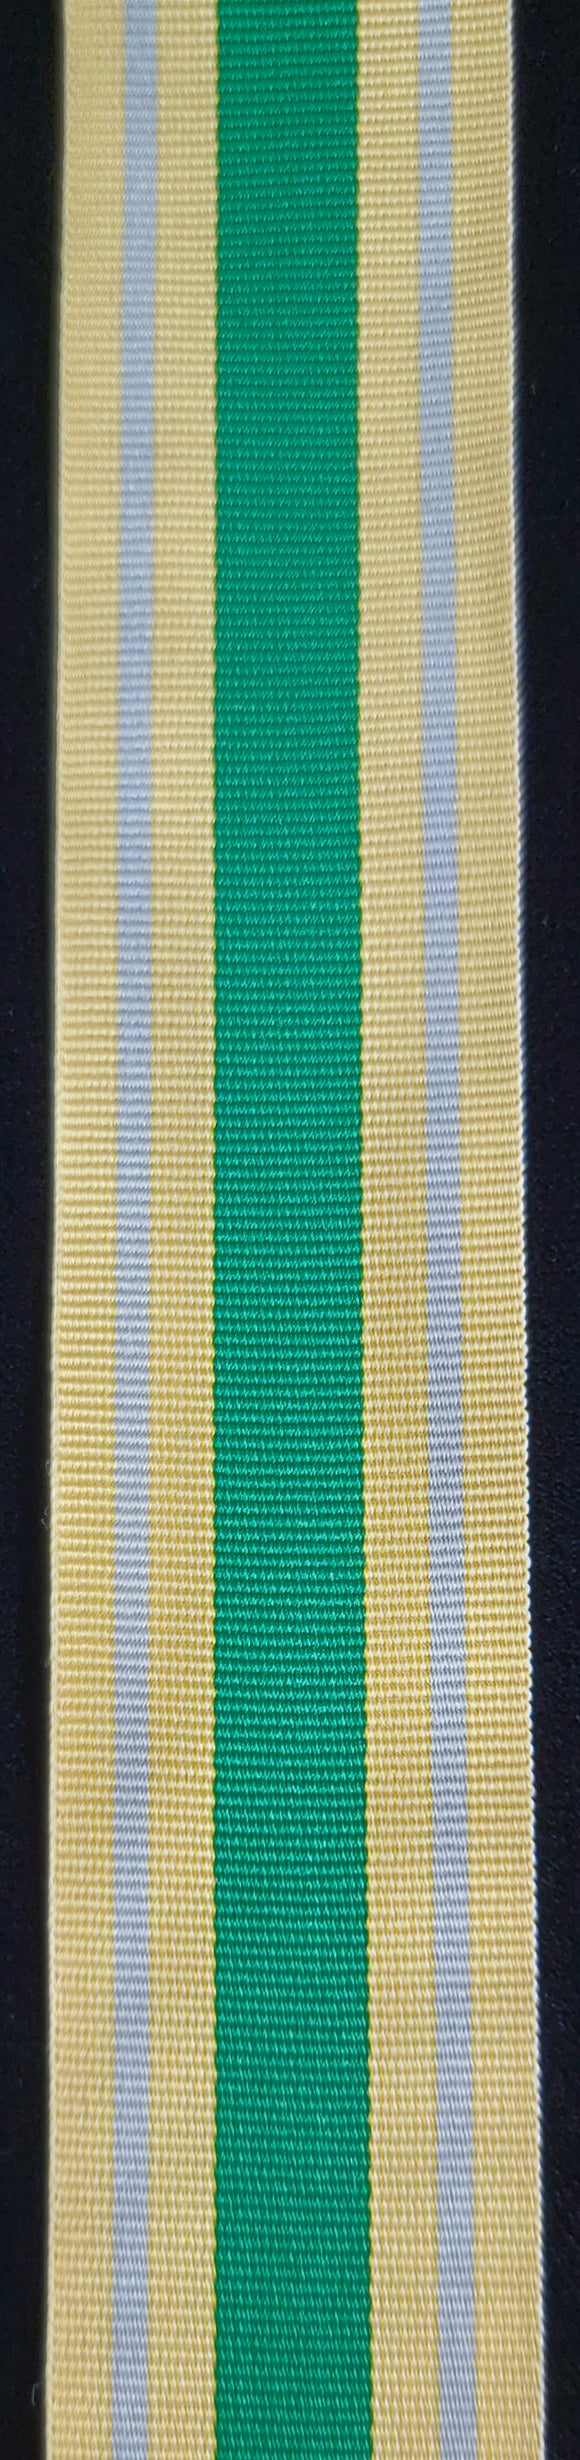 Ribbon, UK Civilian Service Medal (Afghanistan)